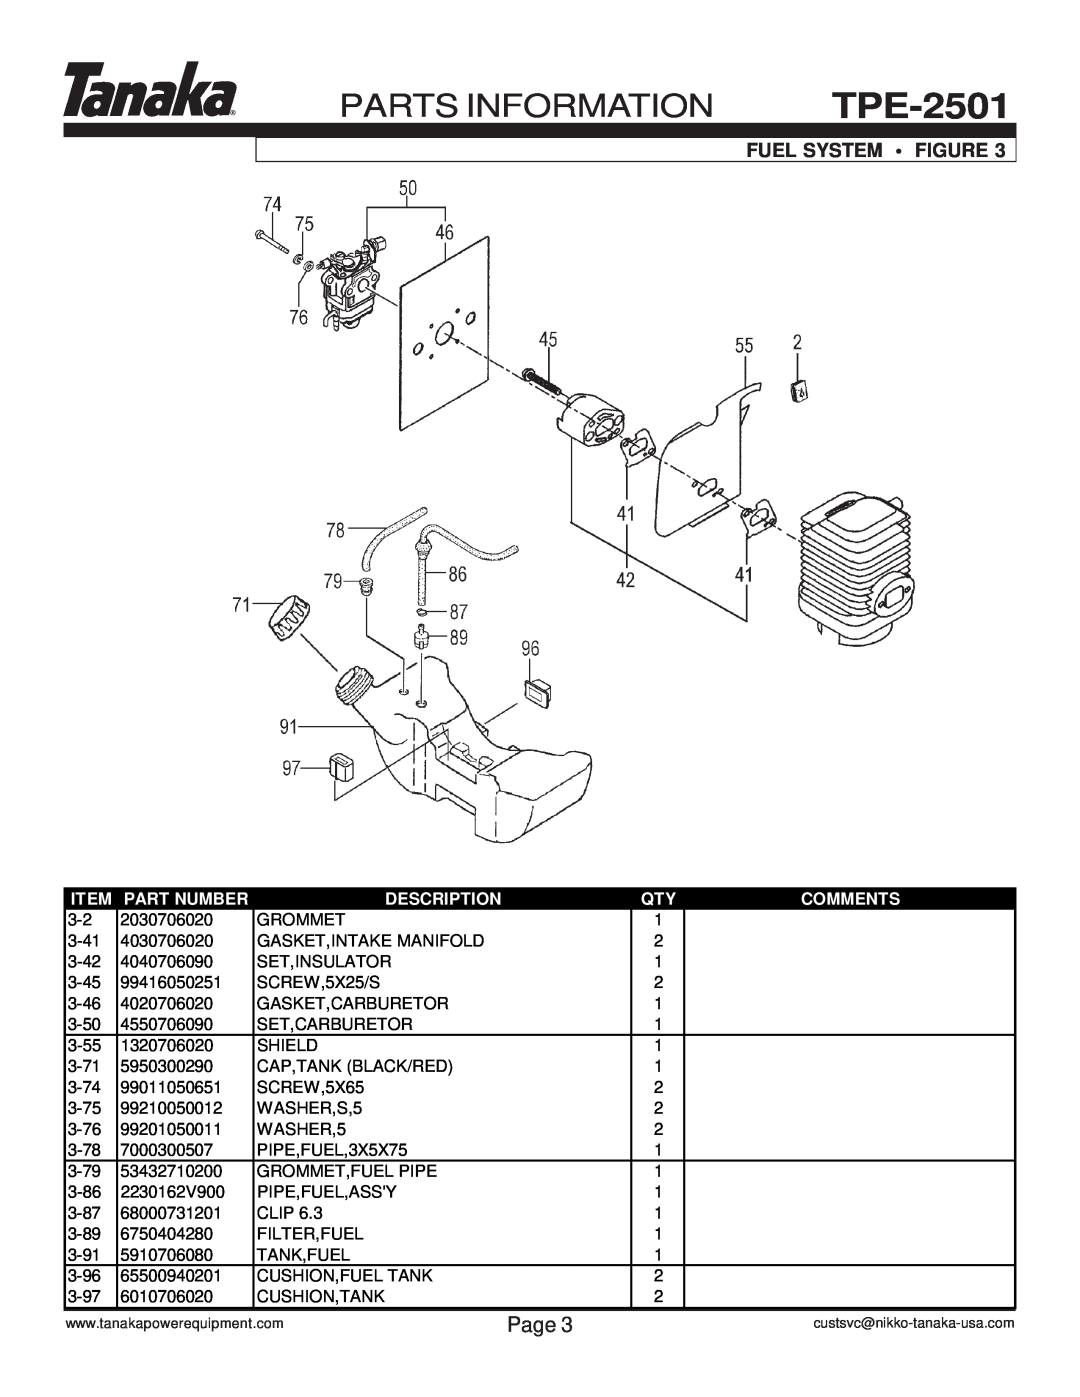 Tanaka TPE-2501 manual Parts Information, Fuel System Figure, Page, Part Number, Description, Comments 